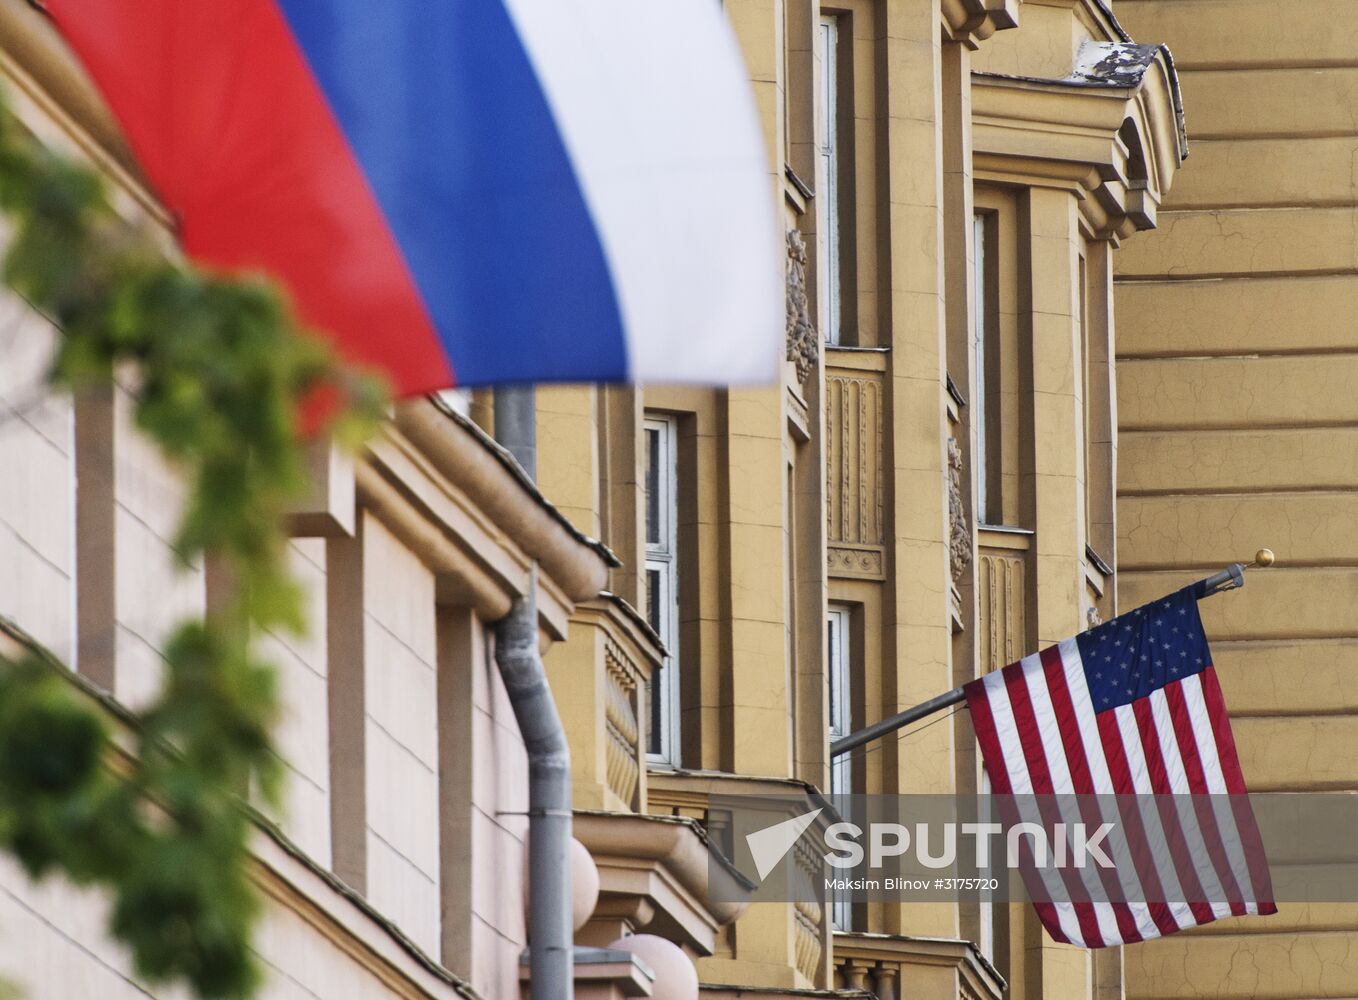 USA suspends issuing nonimmigrant visas in Russia